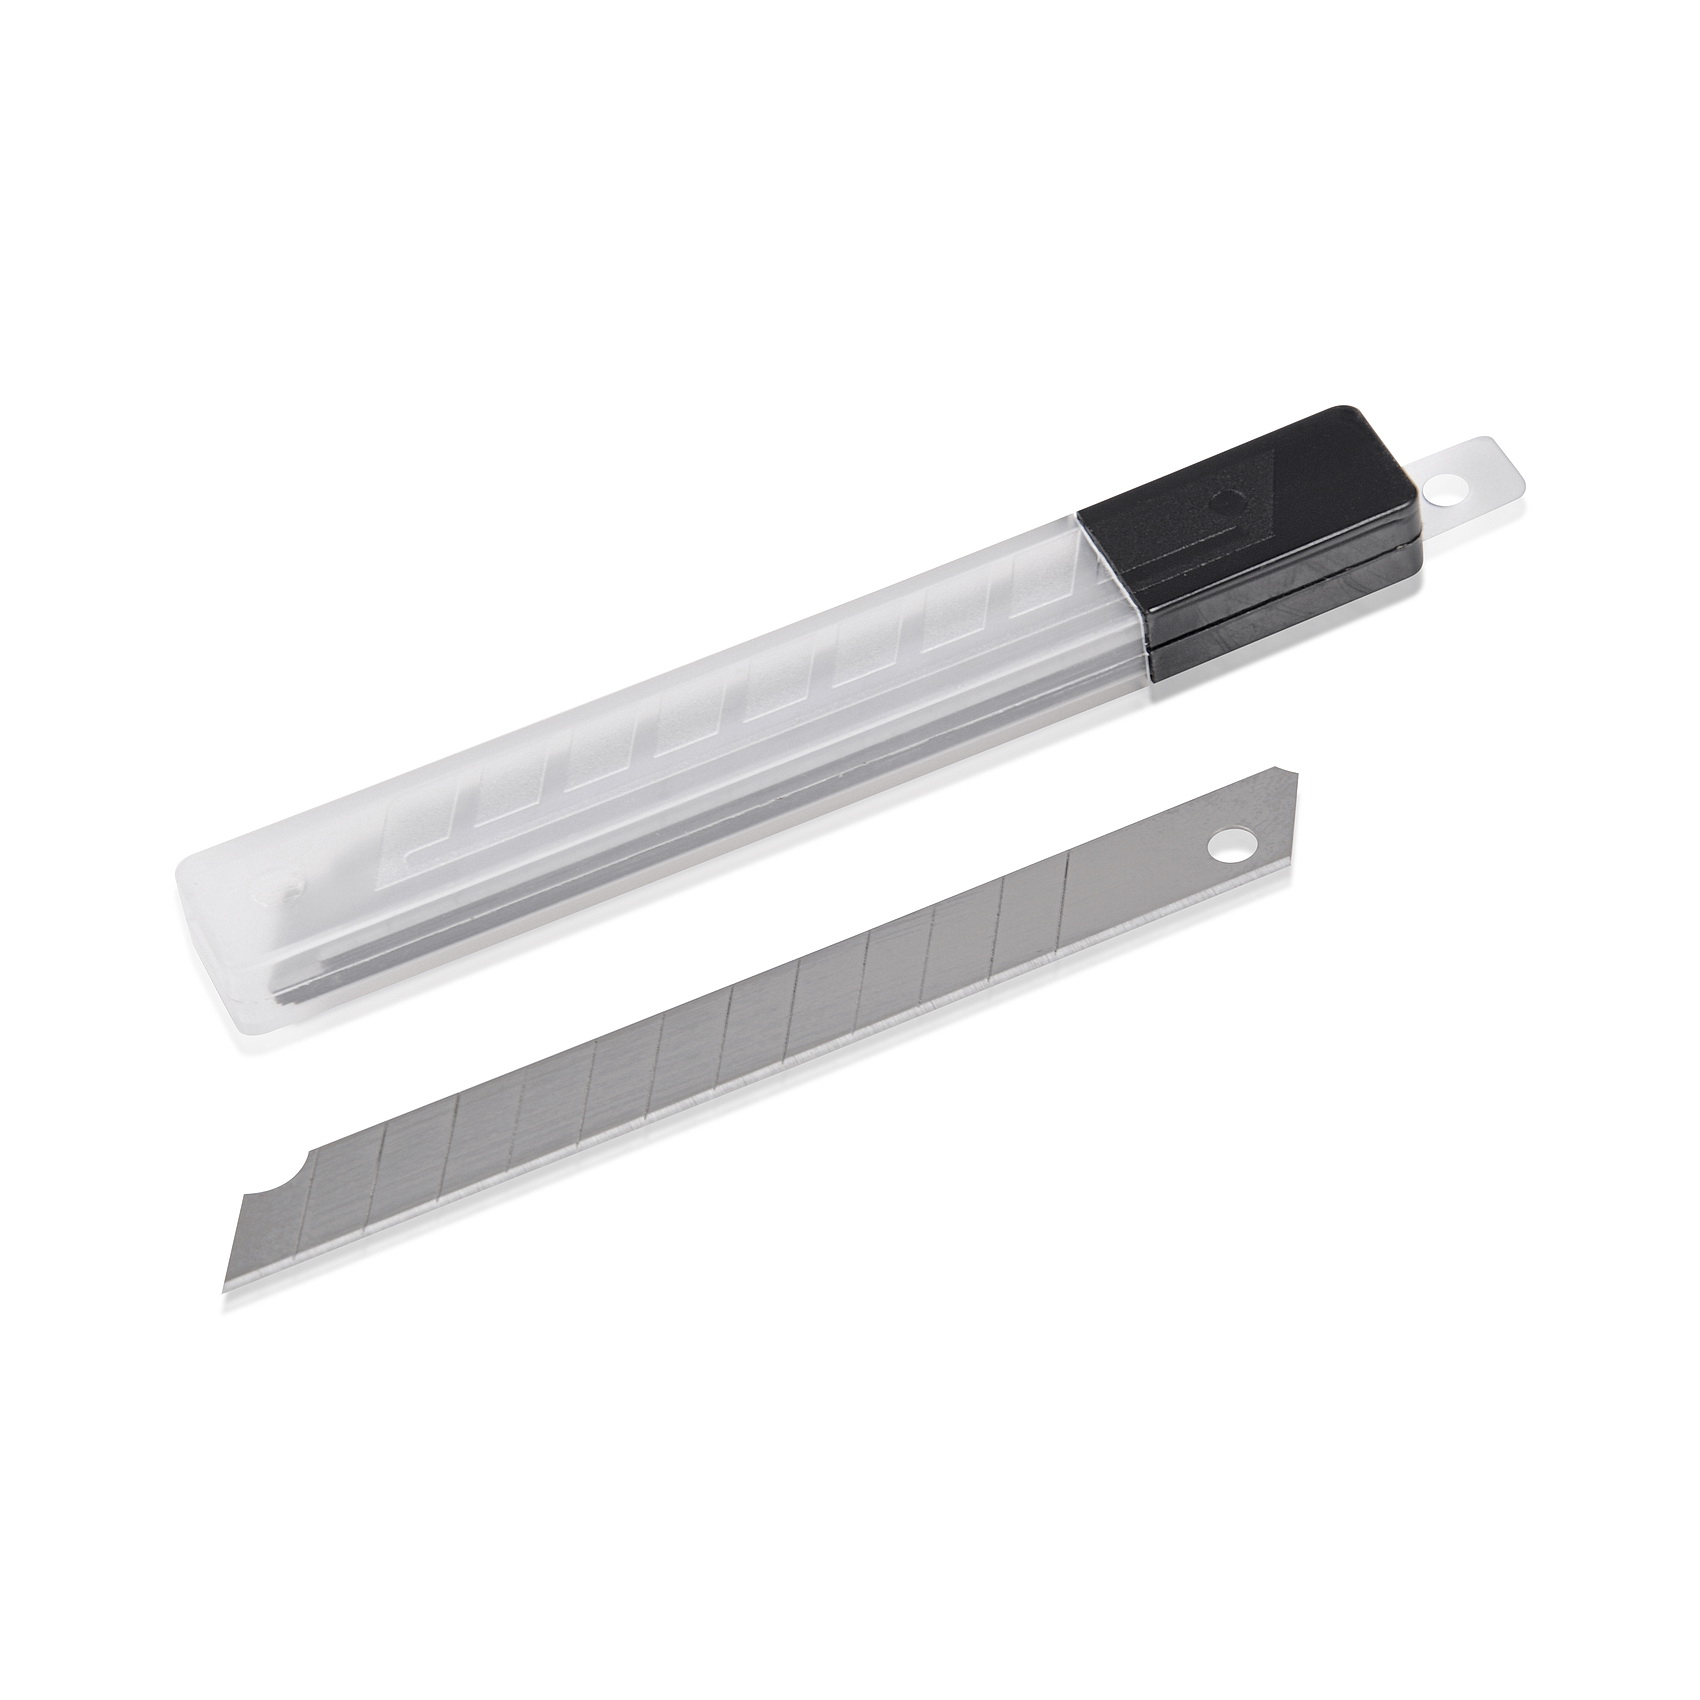 60 Degree 9mm Carbon Steel Snap Blade for Slim Line Knife (Pack of 10)